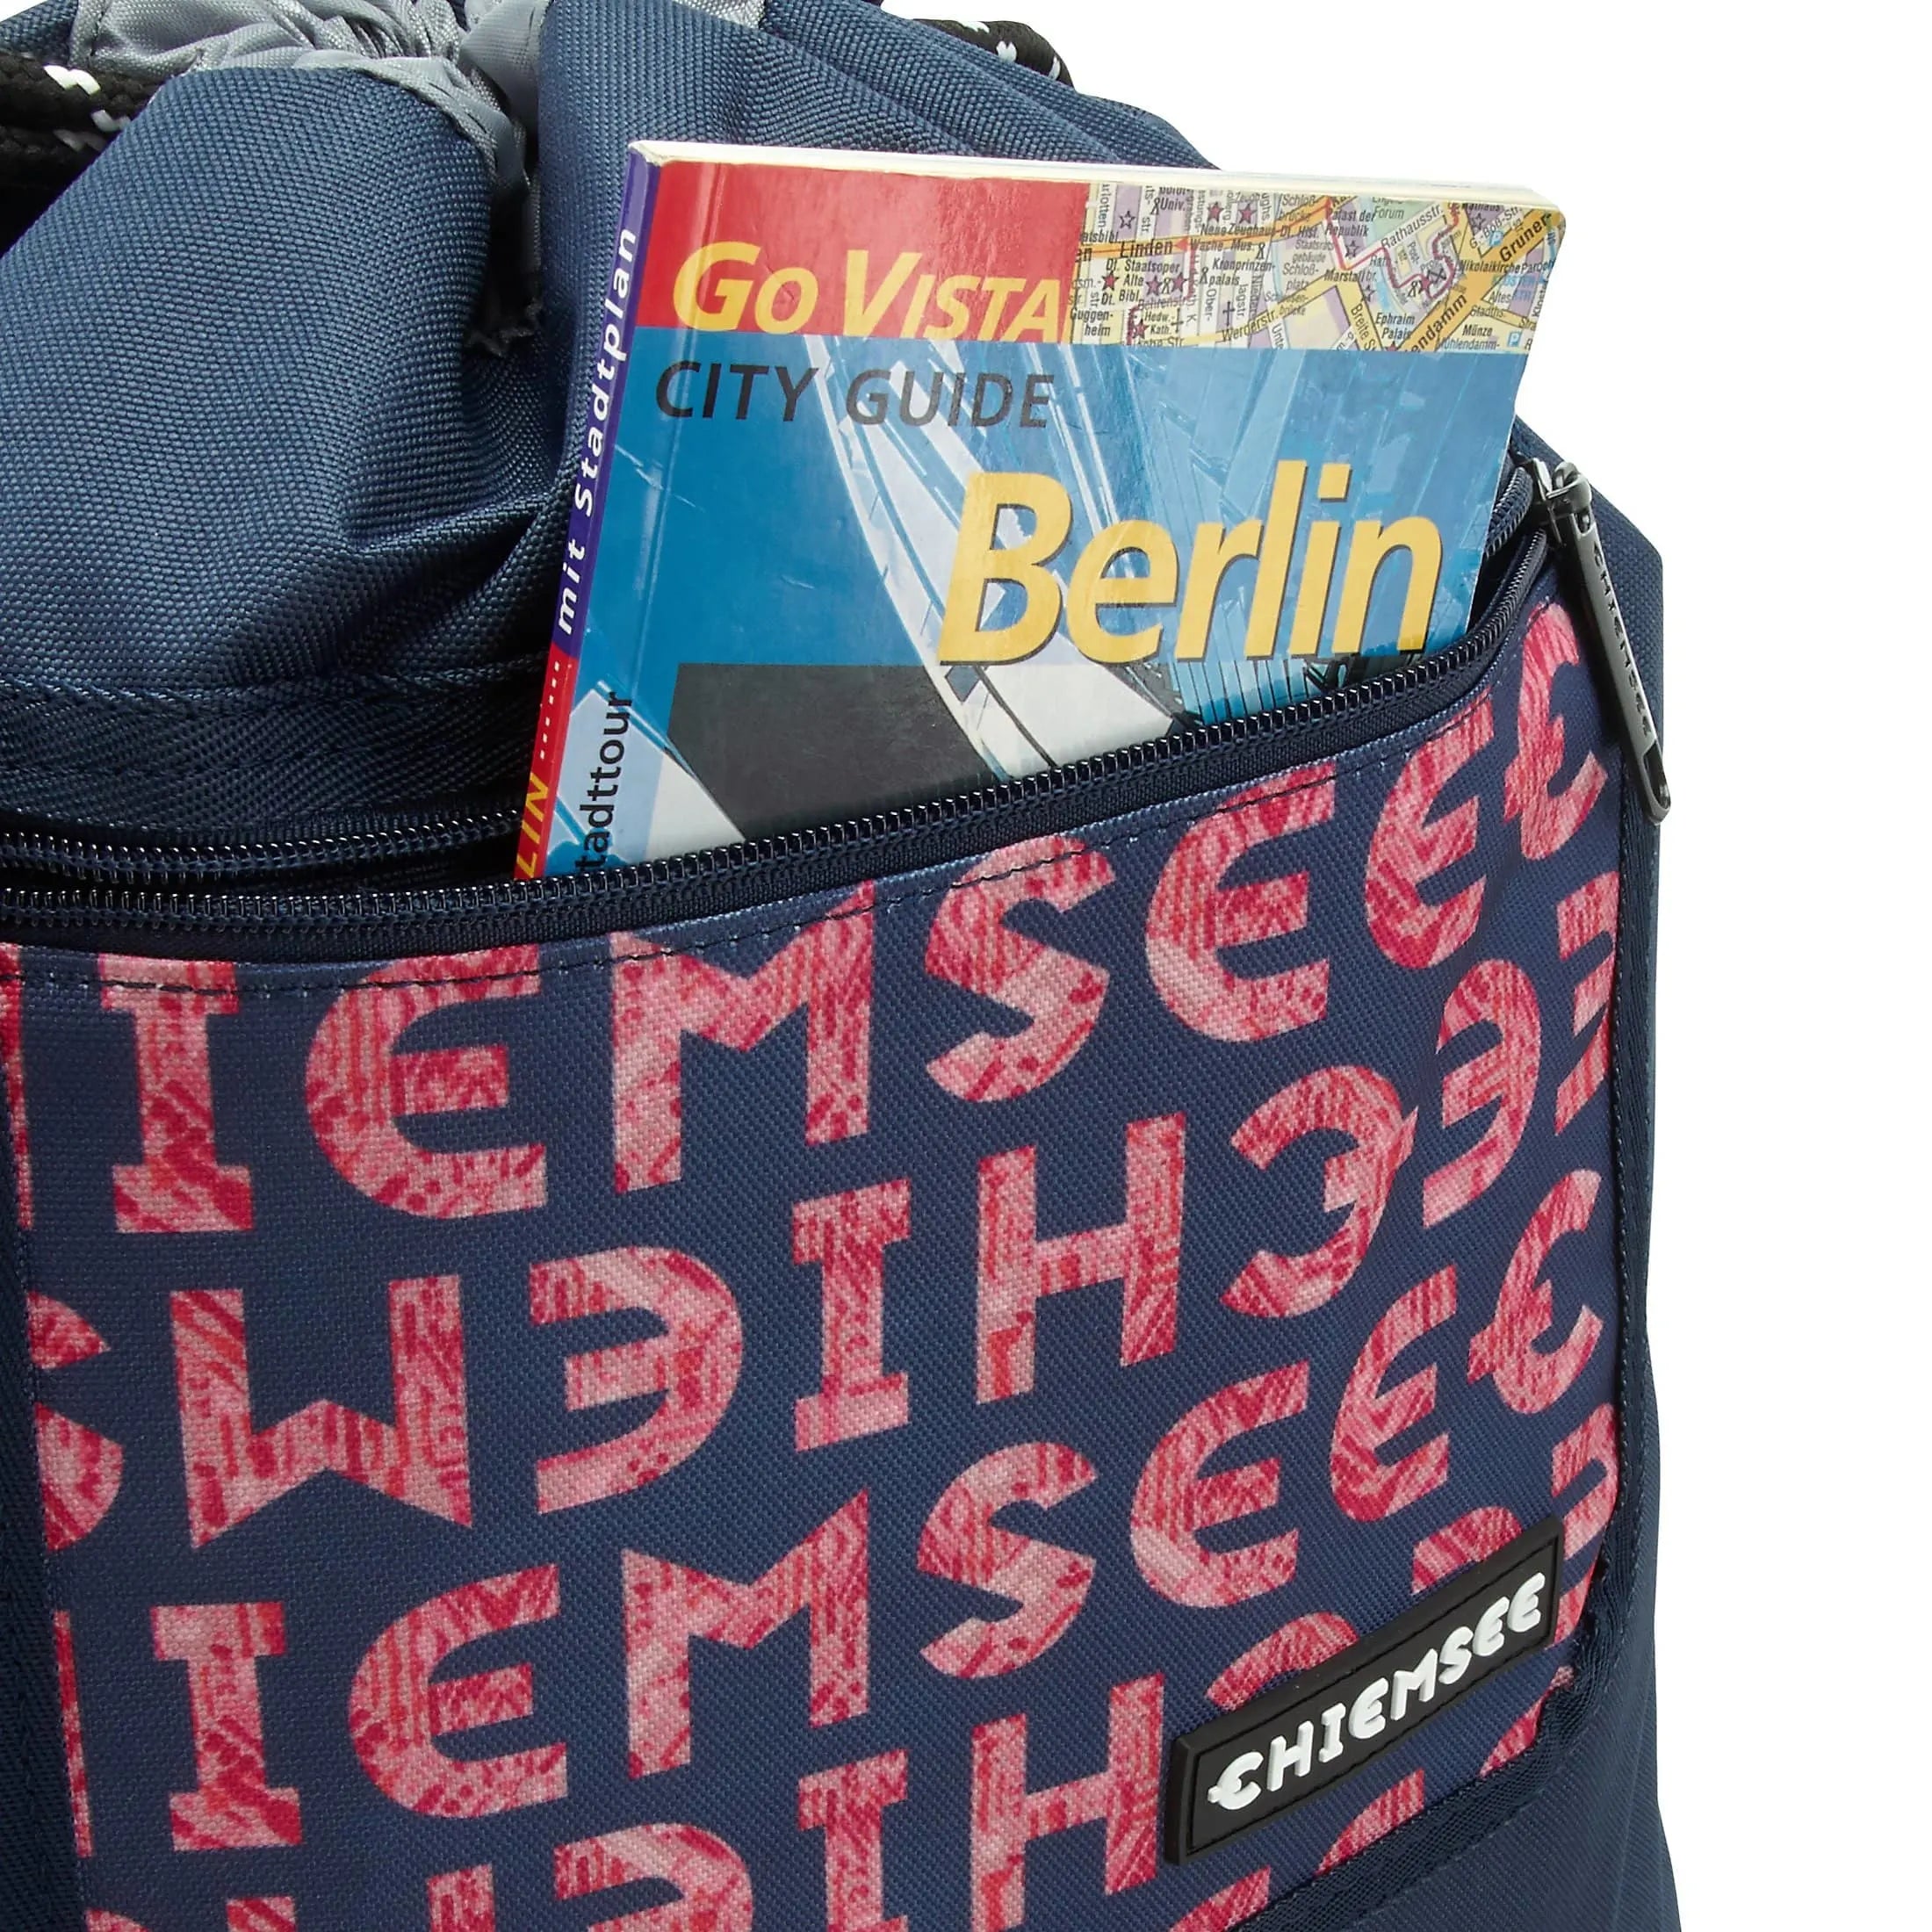 Chiemsee Sports & Travel Bags Drawstring Sportbeutel 45 cm - dark green-sand